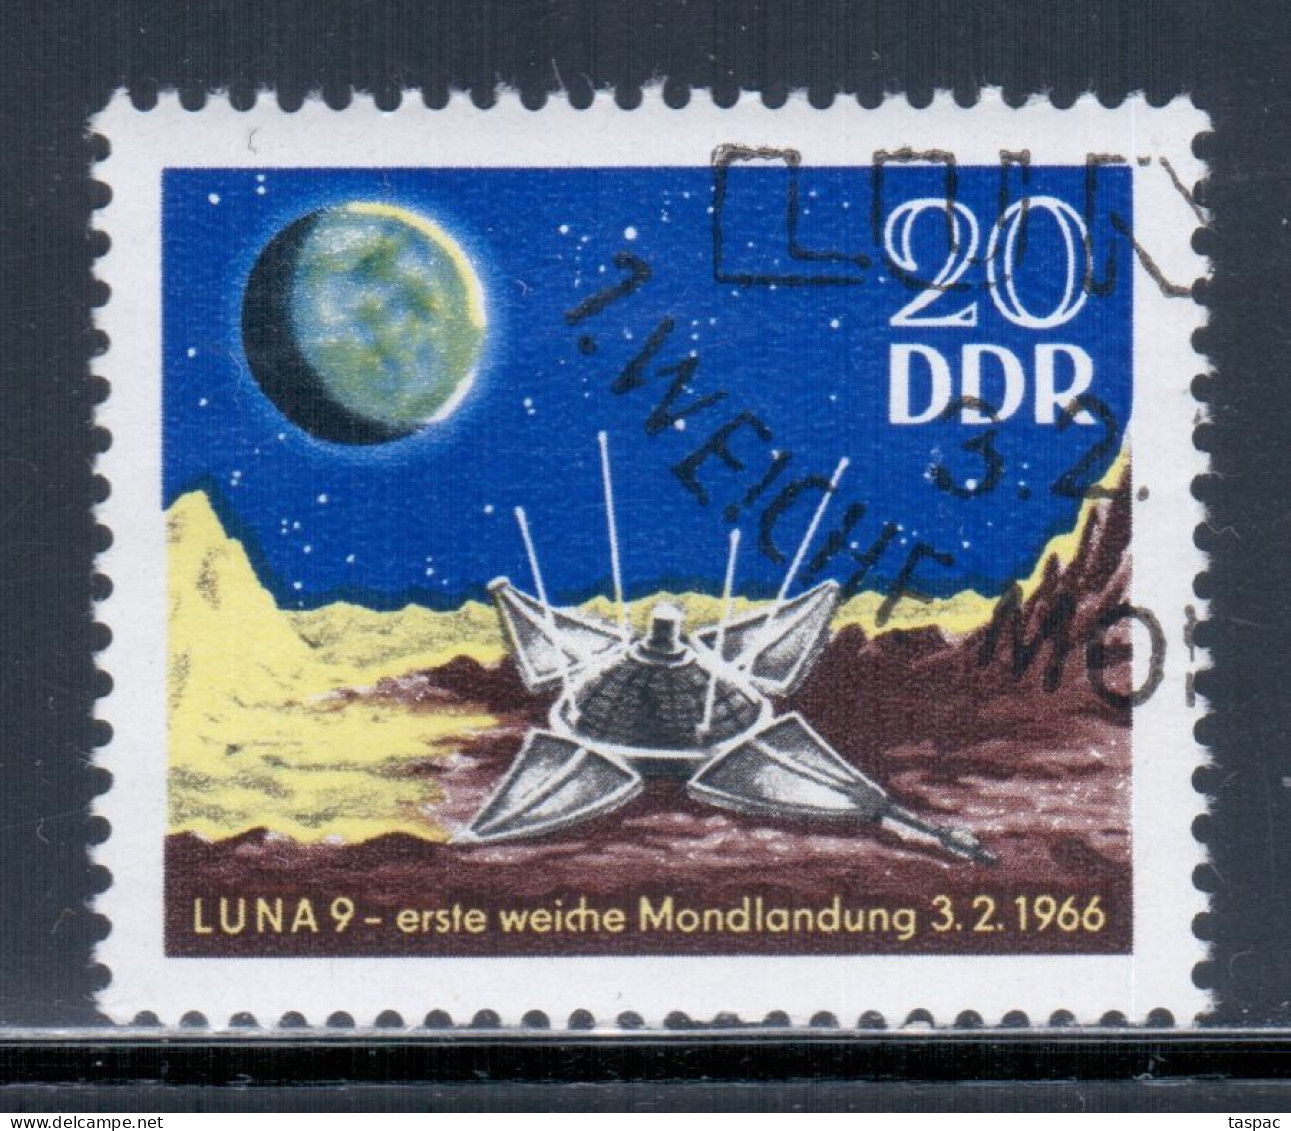 East Germany / DDR 1966 Mi# 1168 Used - Luna 9 On Moon / Space - Europe